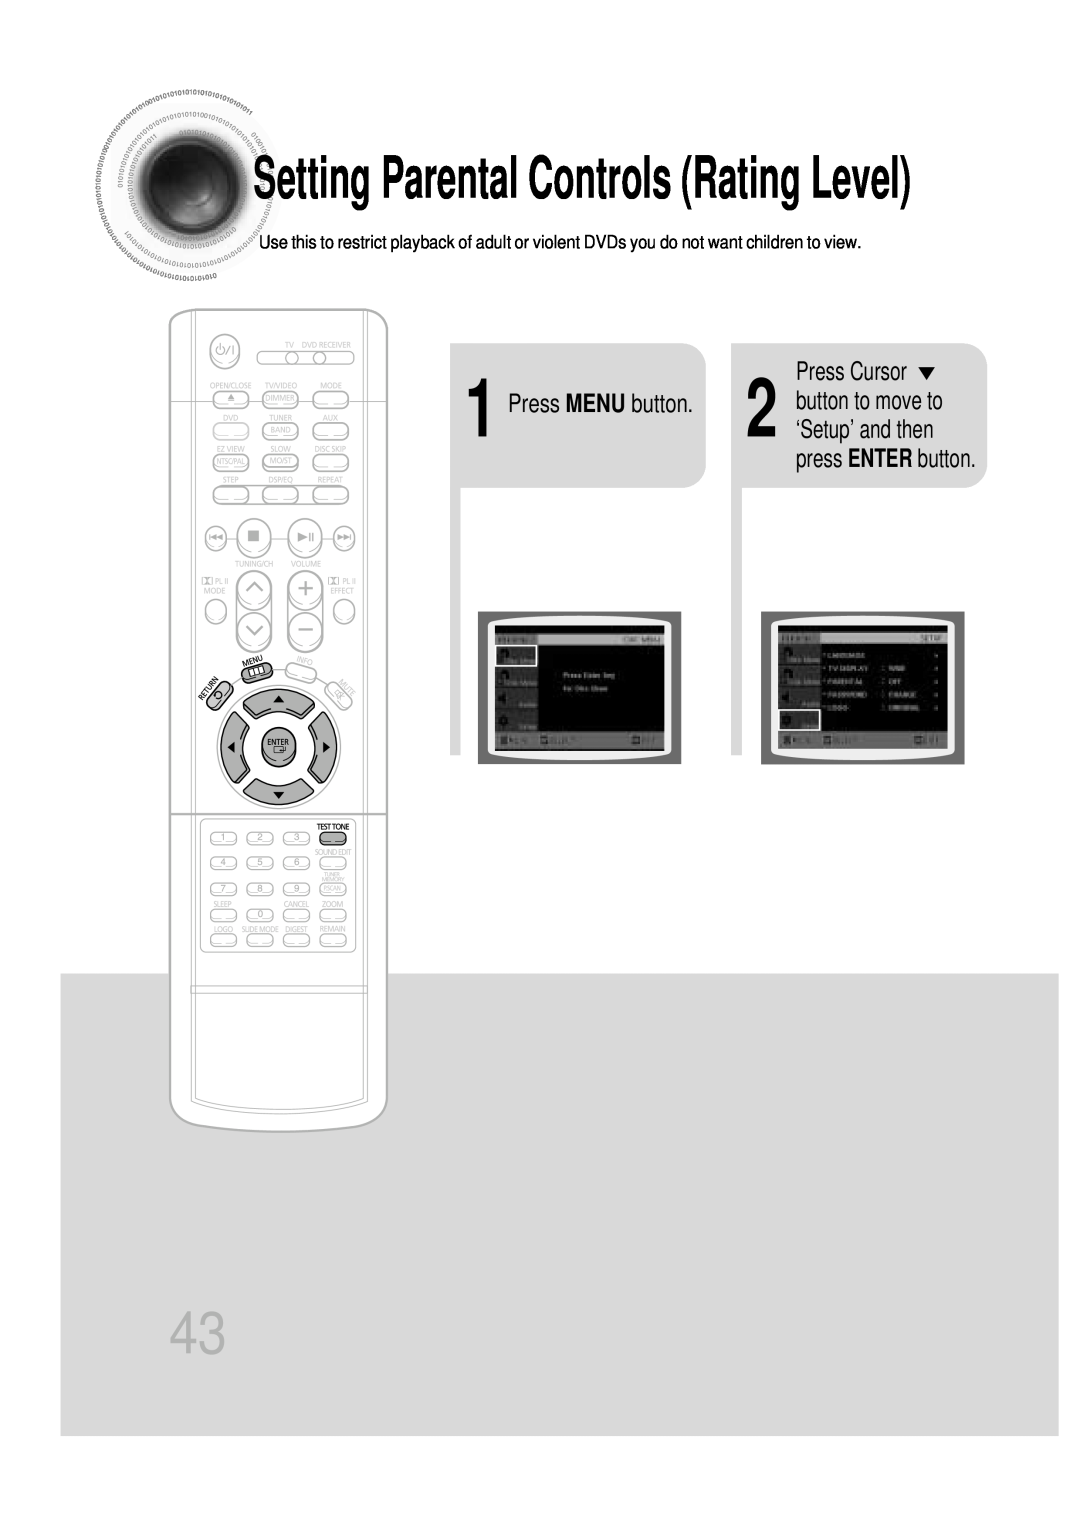 Samsung HT-DB600 instruction manual Setting Parental Controls Rating Level, press ENTER button 